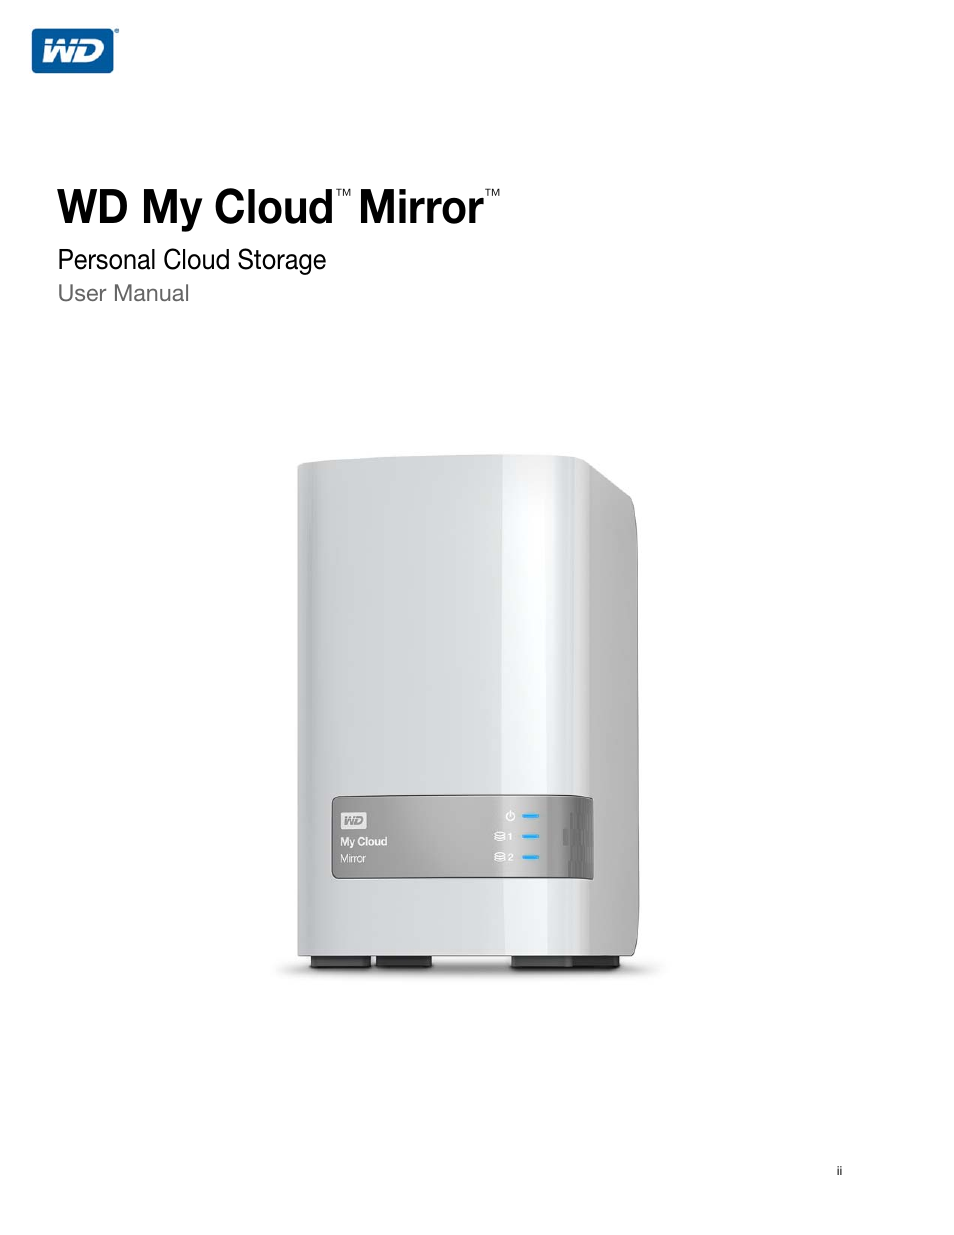 Western Digital My Cloud Mirror User Manual User Manual | 166 pages